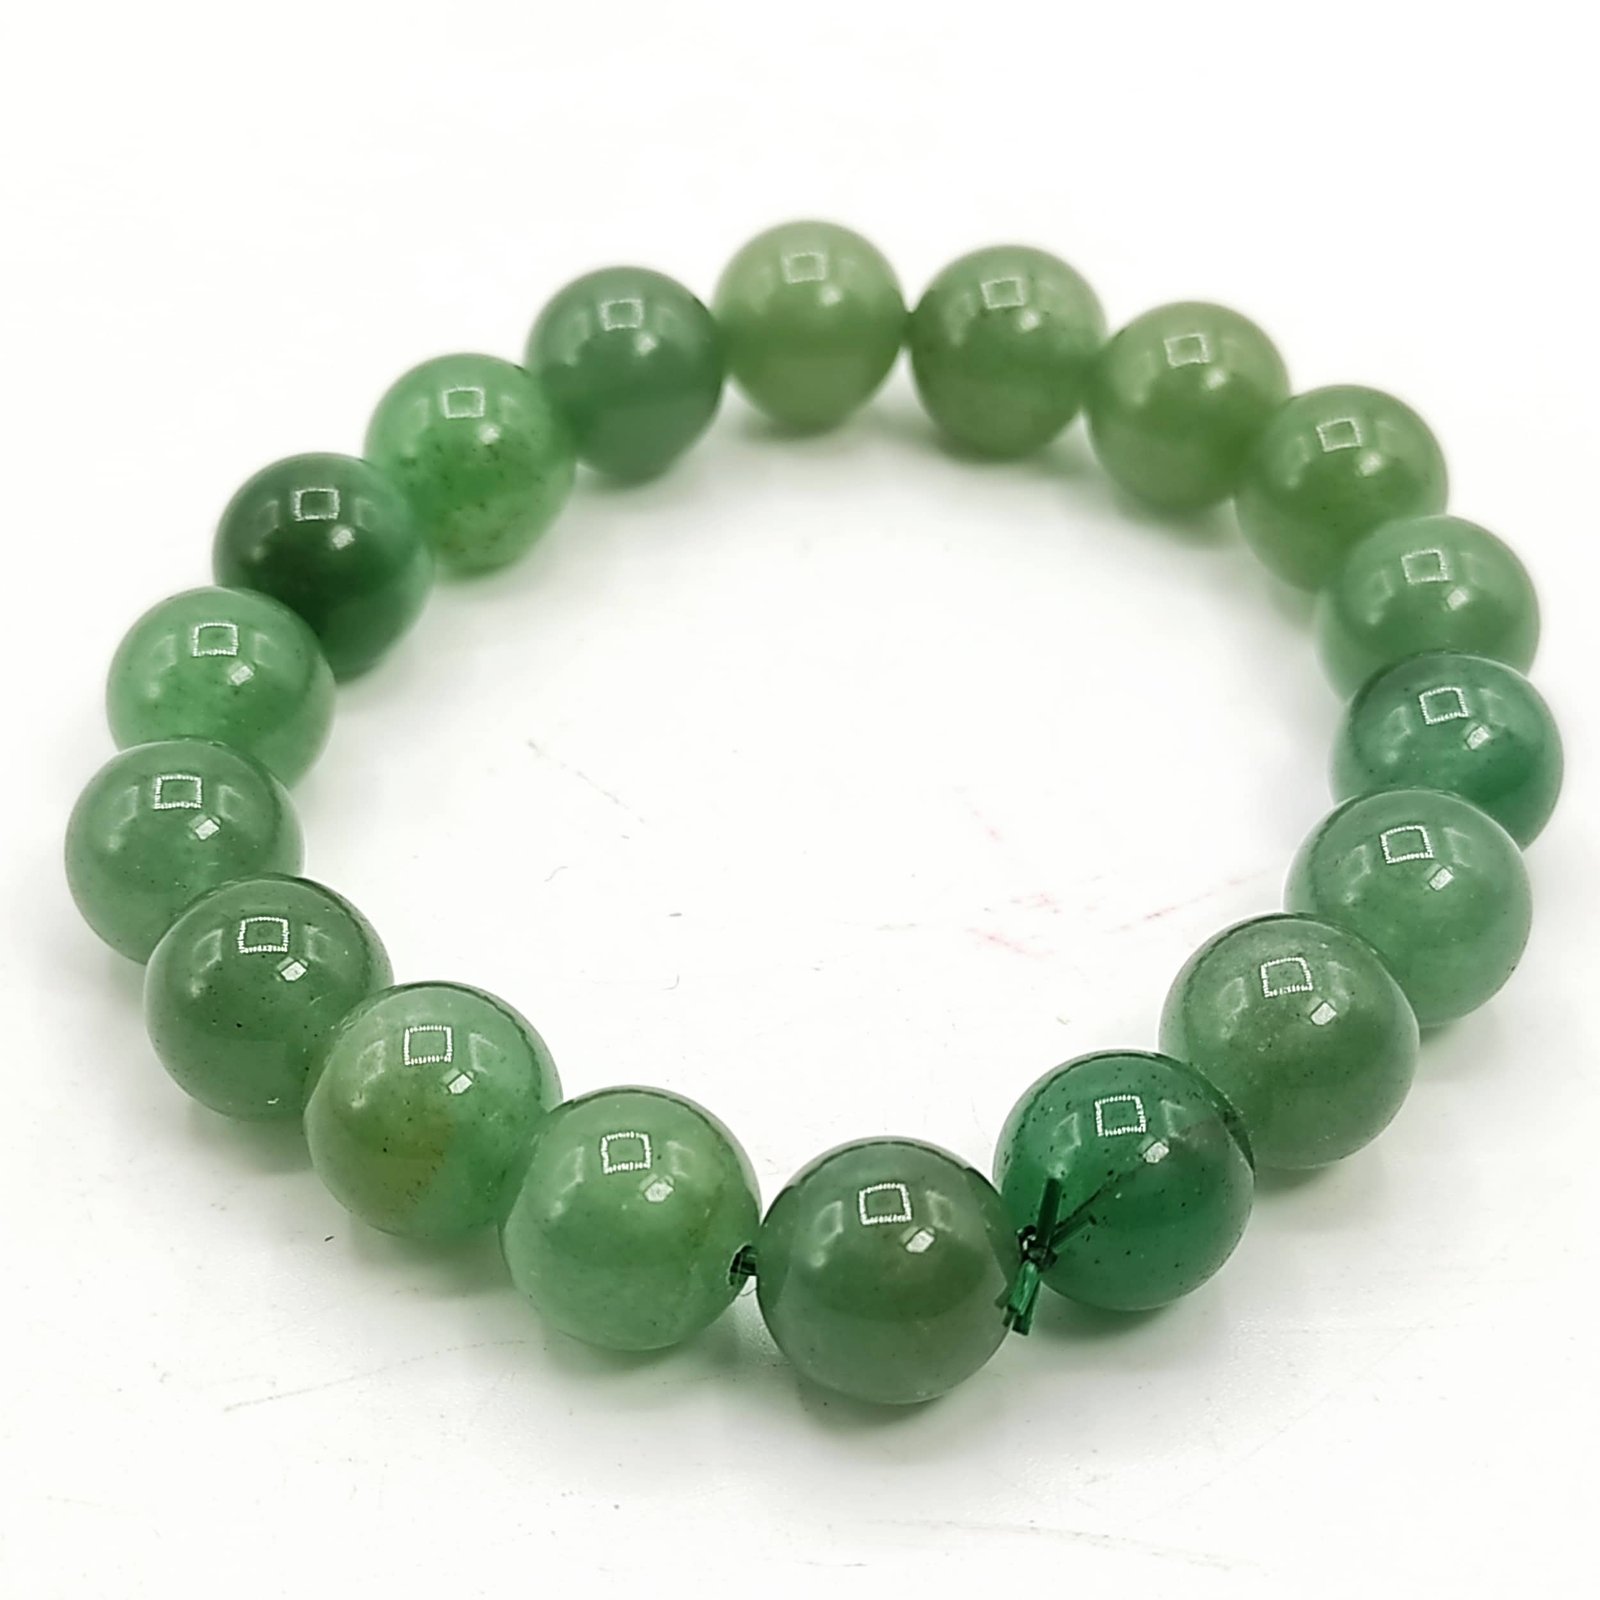 Soft Paris Green Jadeite Bead Bracelet - 100% Natural Type A Burma Jadeite